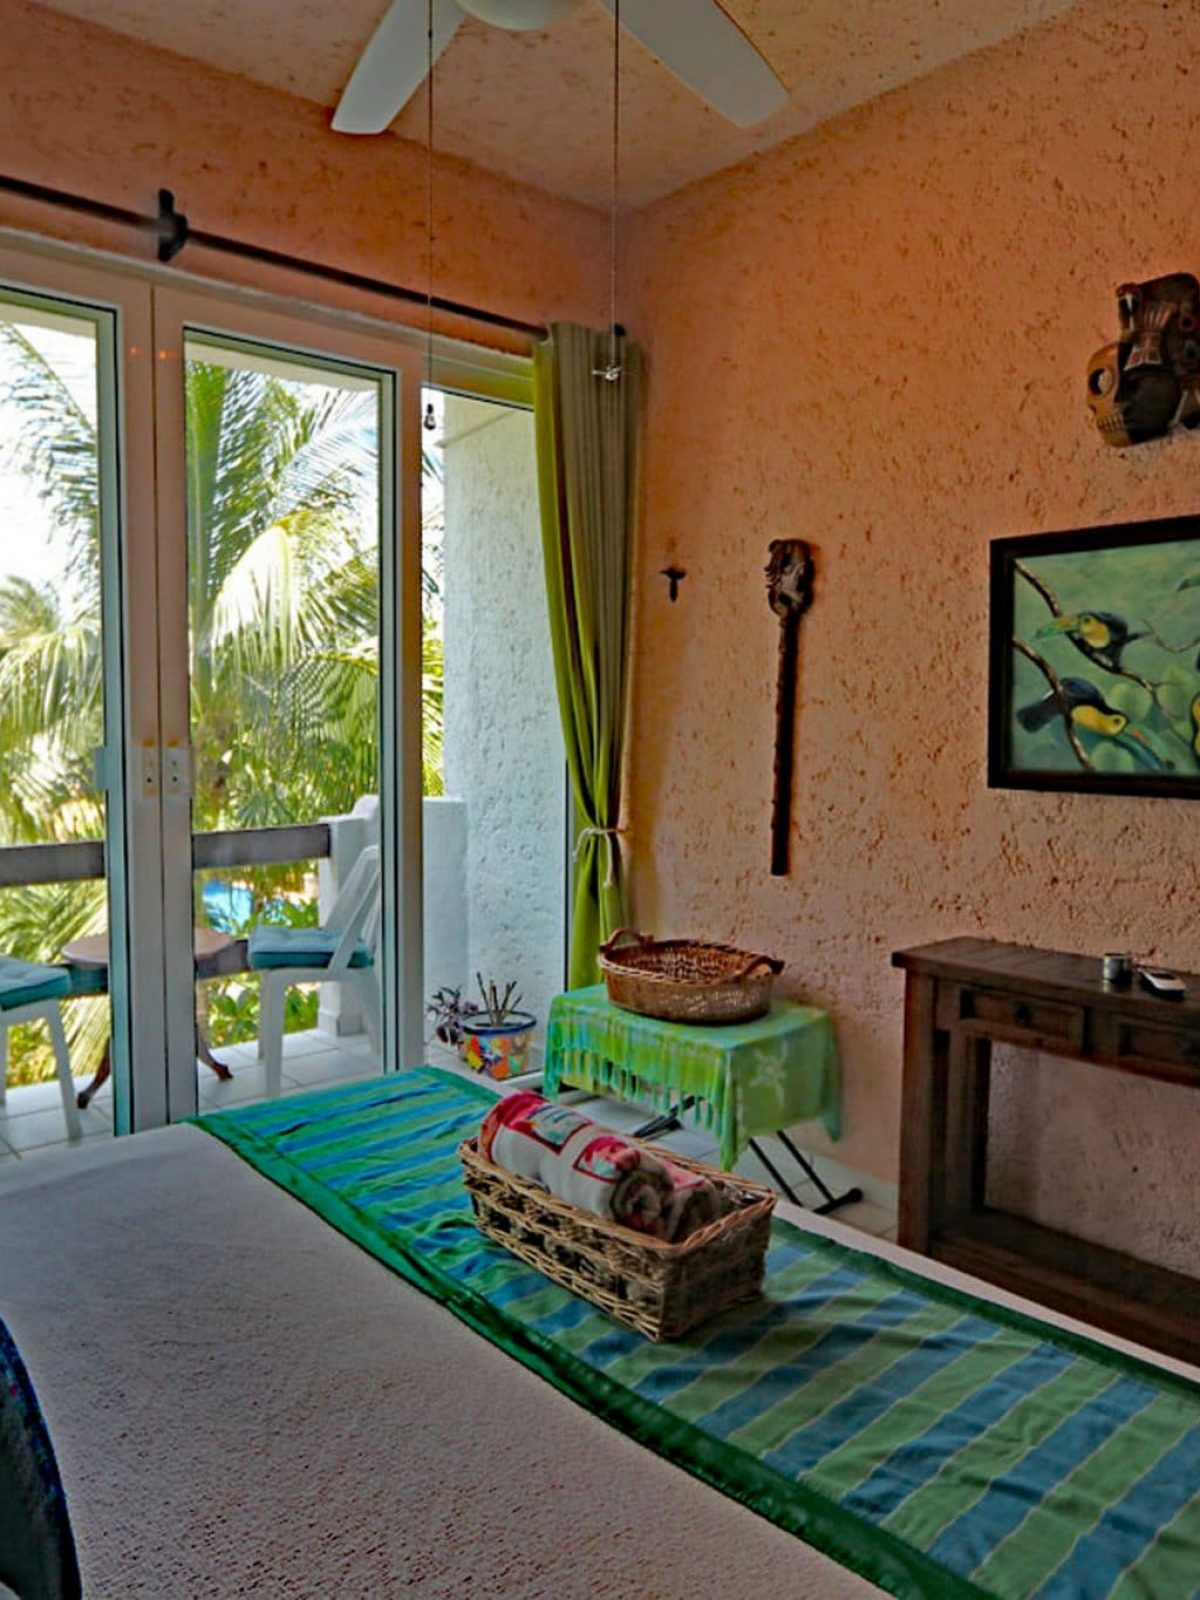 Cen Balam, La Sirena #5, 2nd bedroom has its own private patio overlooking La Sirena gardens